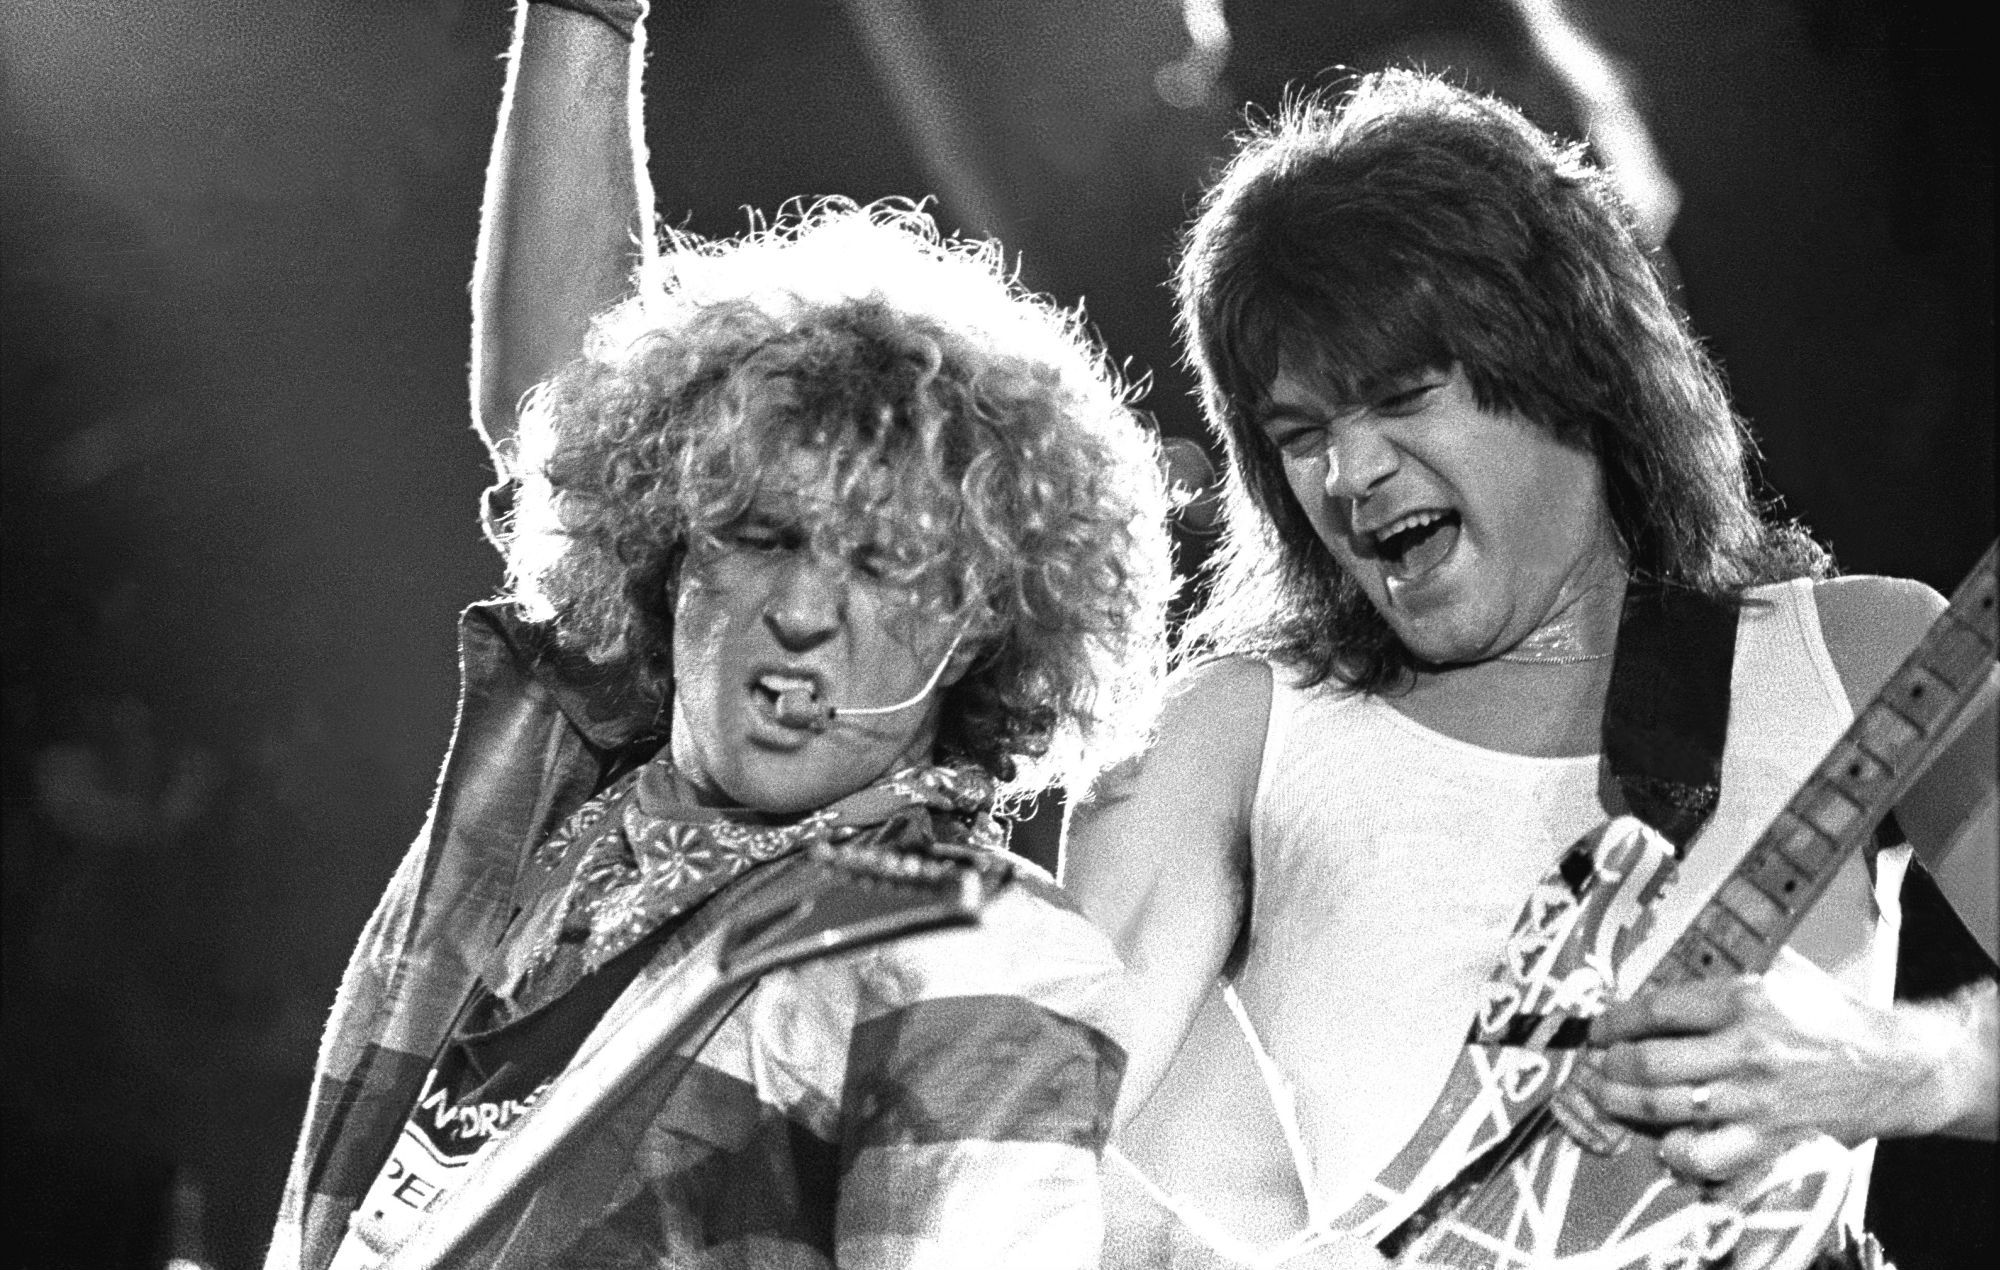 Sammy Hagar: Eddie Van Halen's death would've been way too much for me had feud not ended